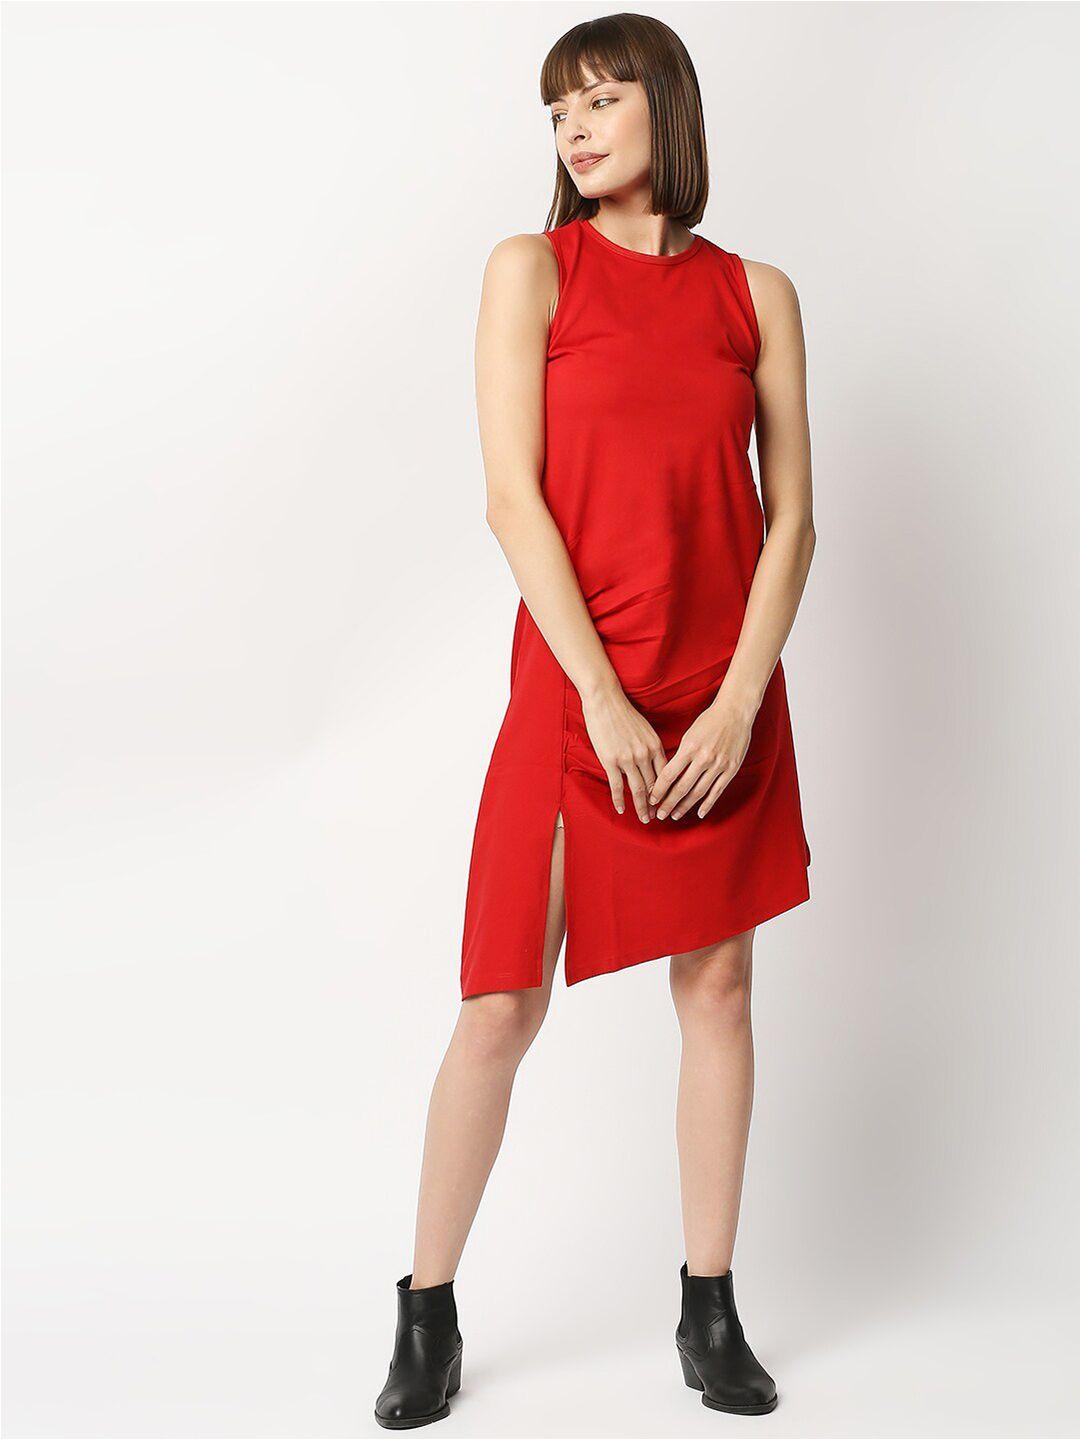 blamblack women red sheath dress